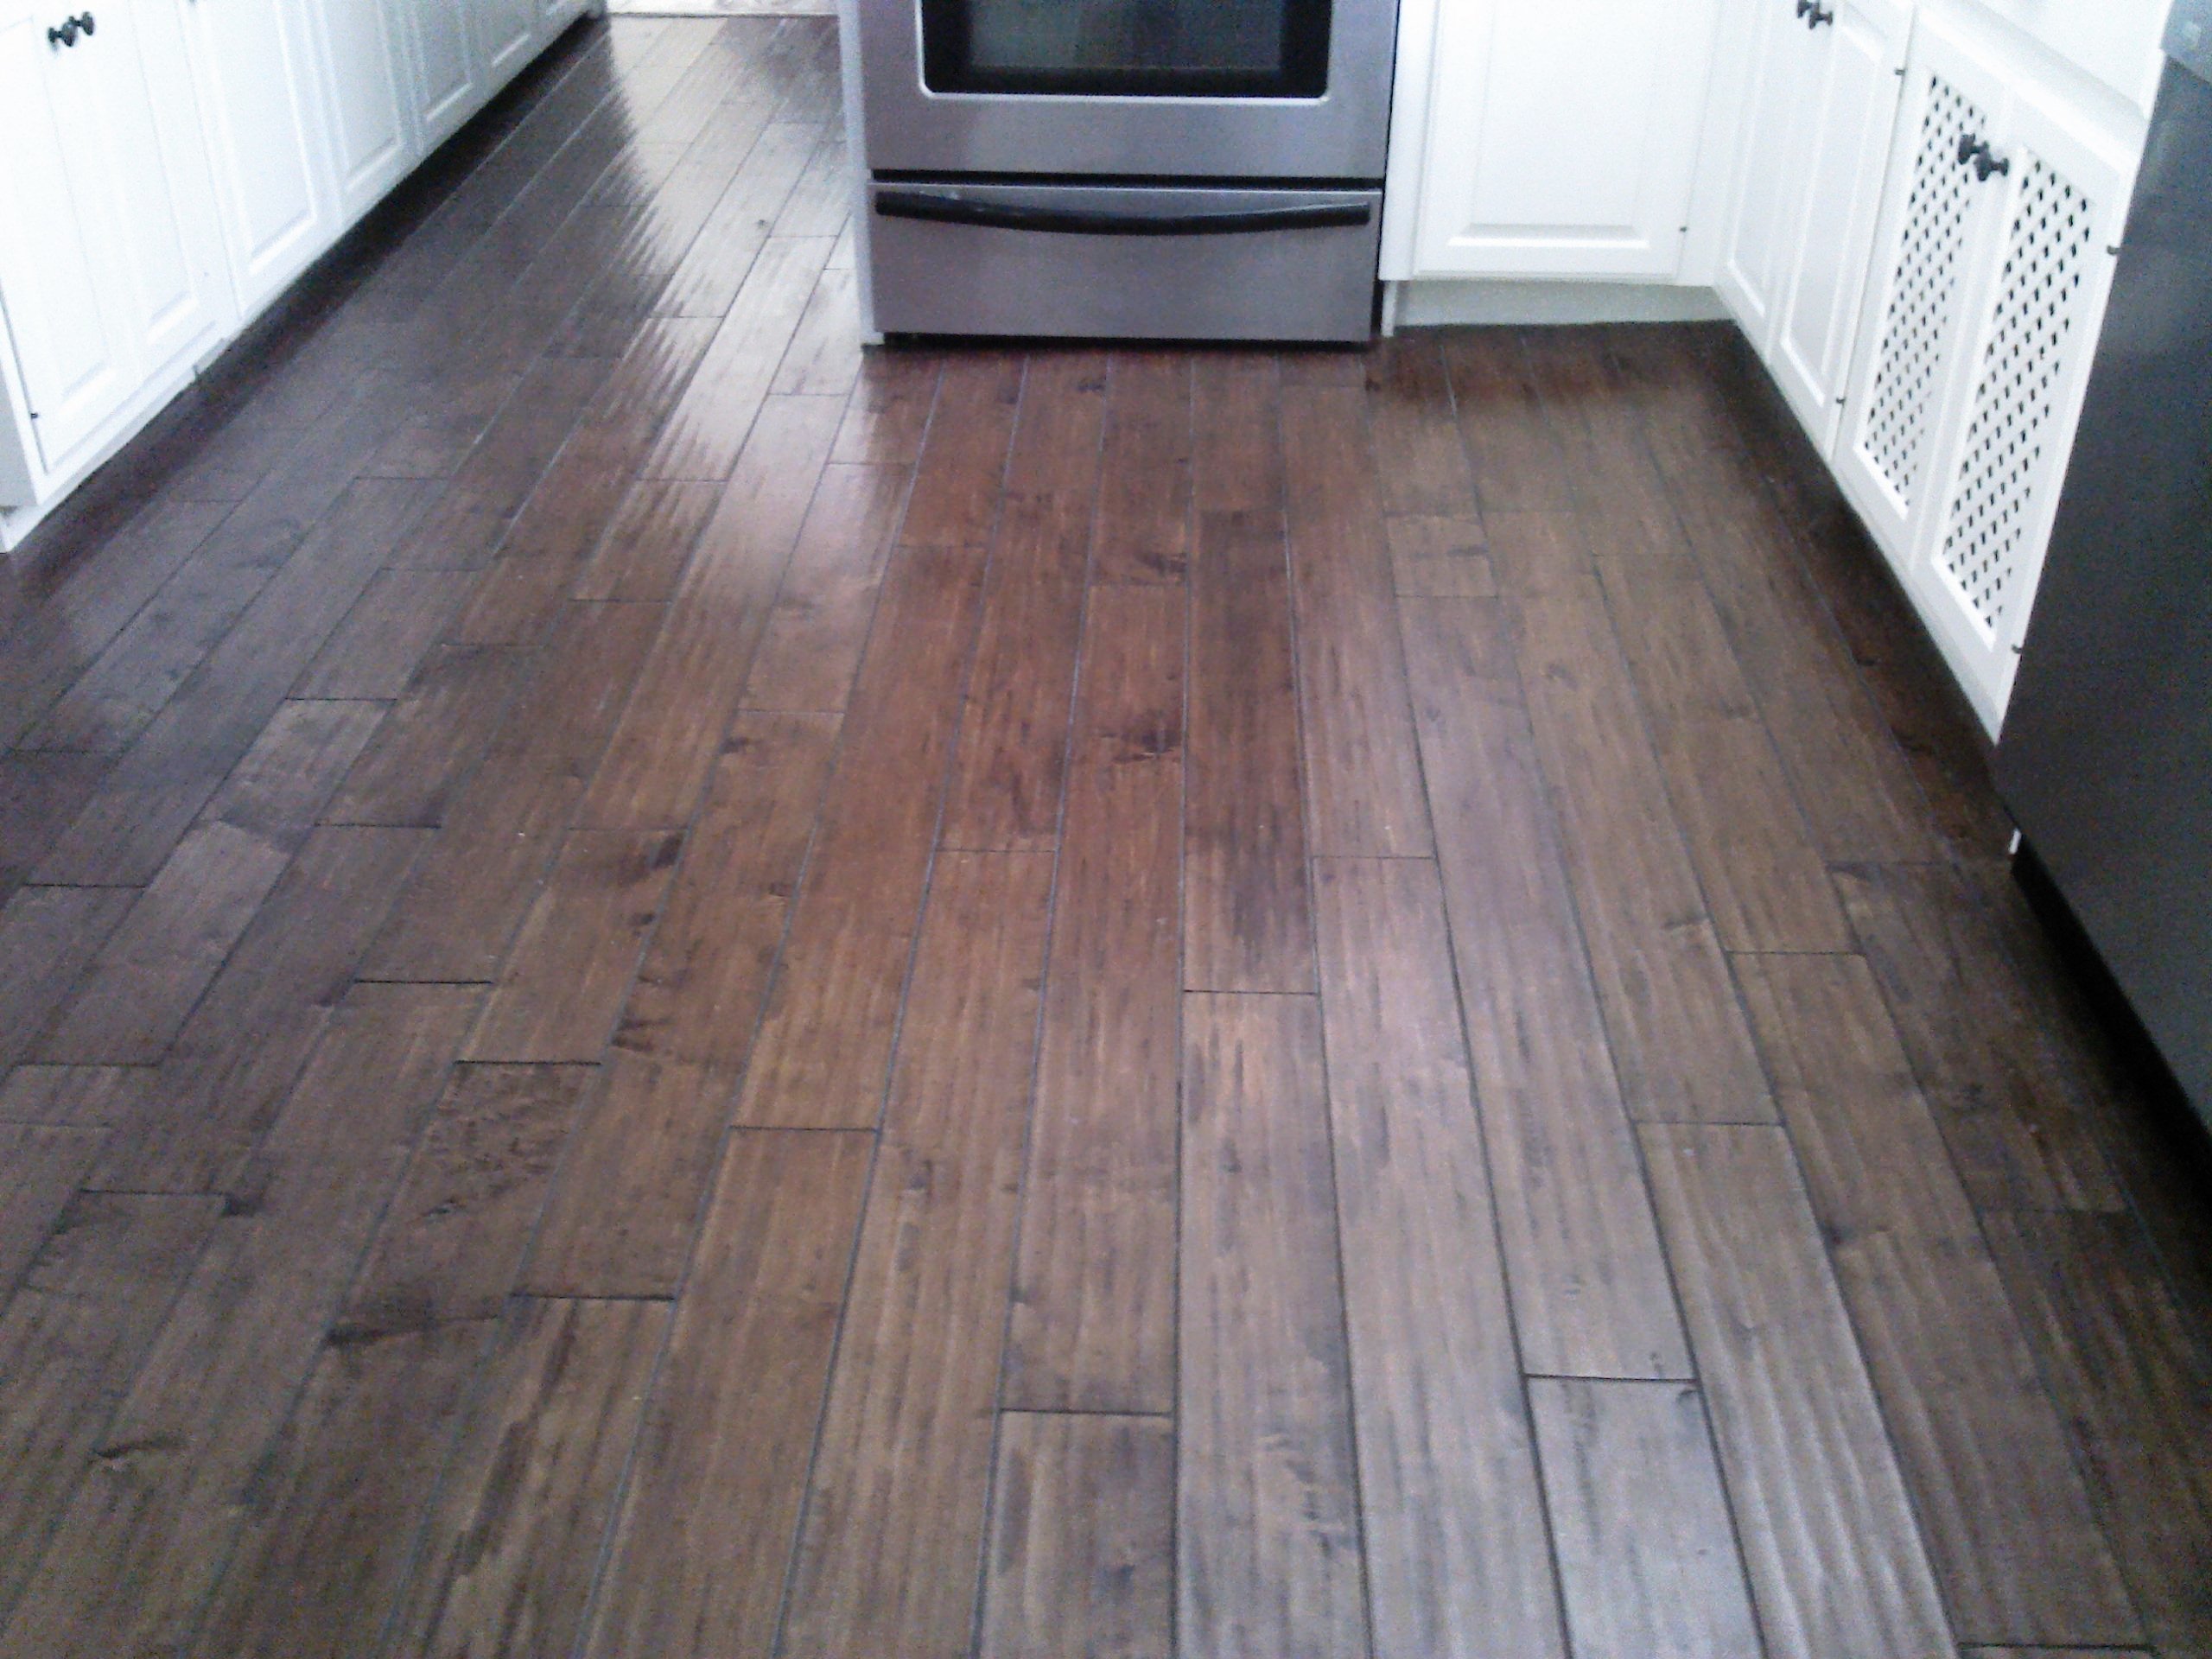 Laminate Wood Flooring In Kitchen, Laminate Wood Flooring Vs Wood Look Tile